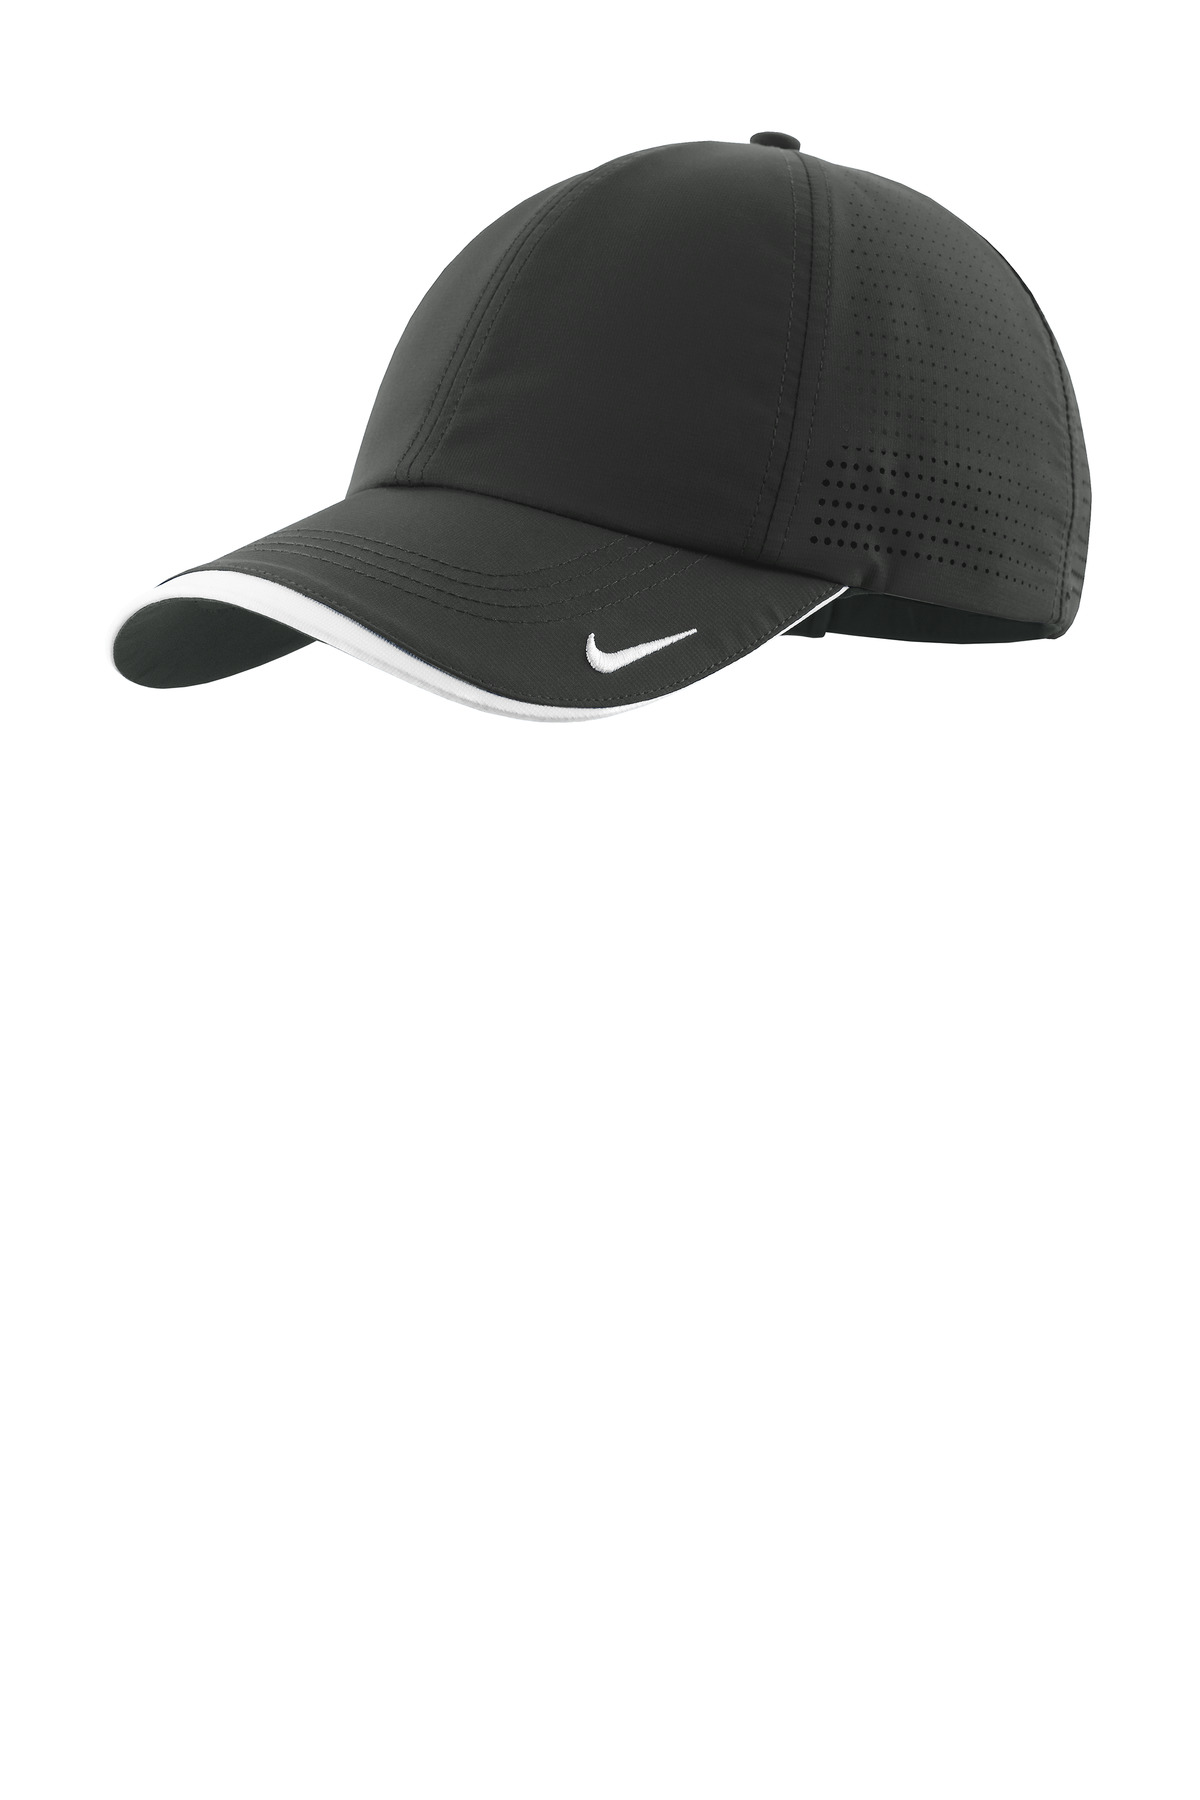 Nike Dri-FIT Perforated Performance Cap-Nike